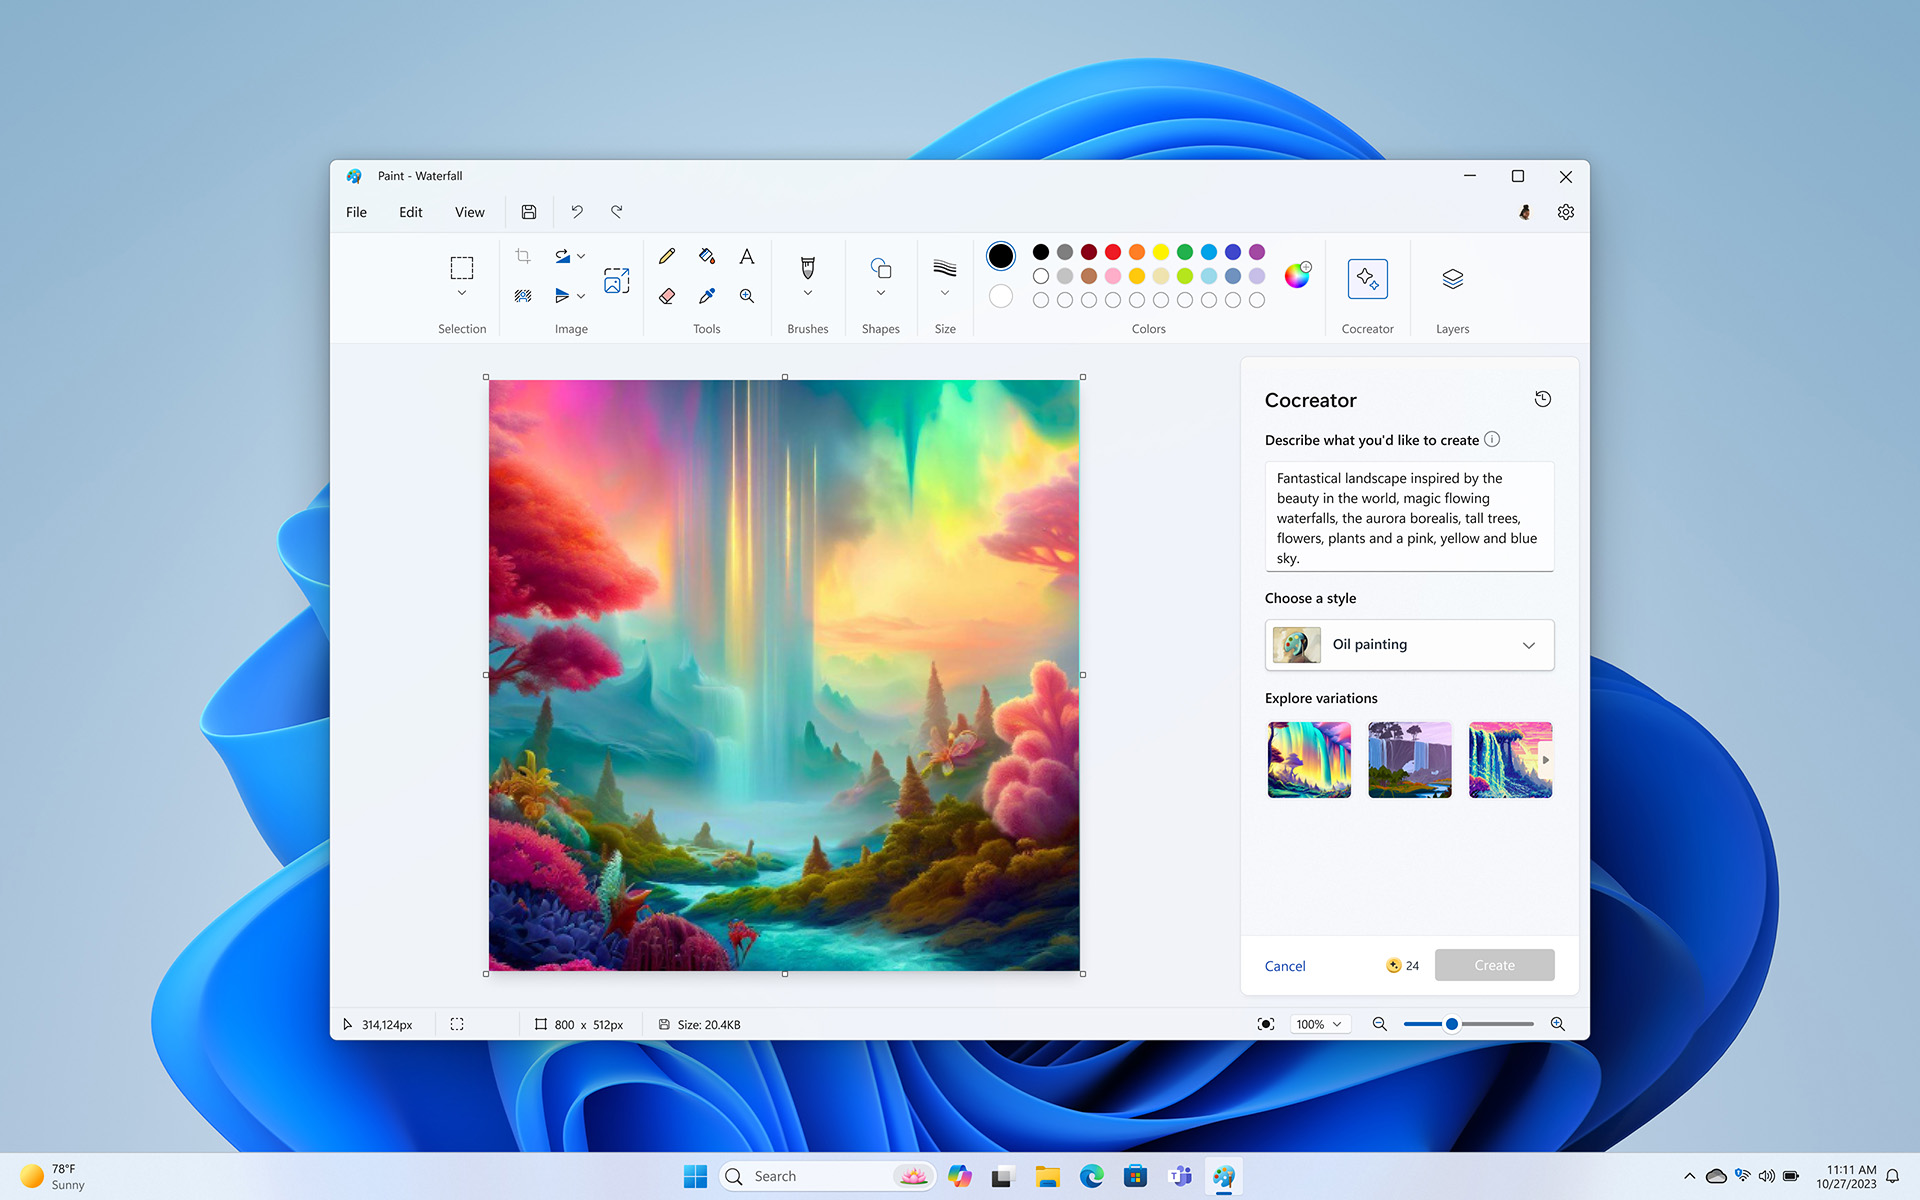 Screenshot of Paint app with colorful fantastical landscape illustration